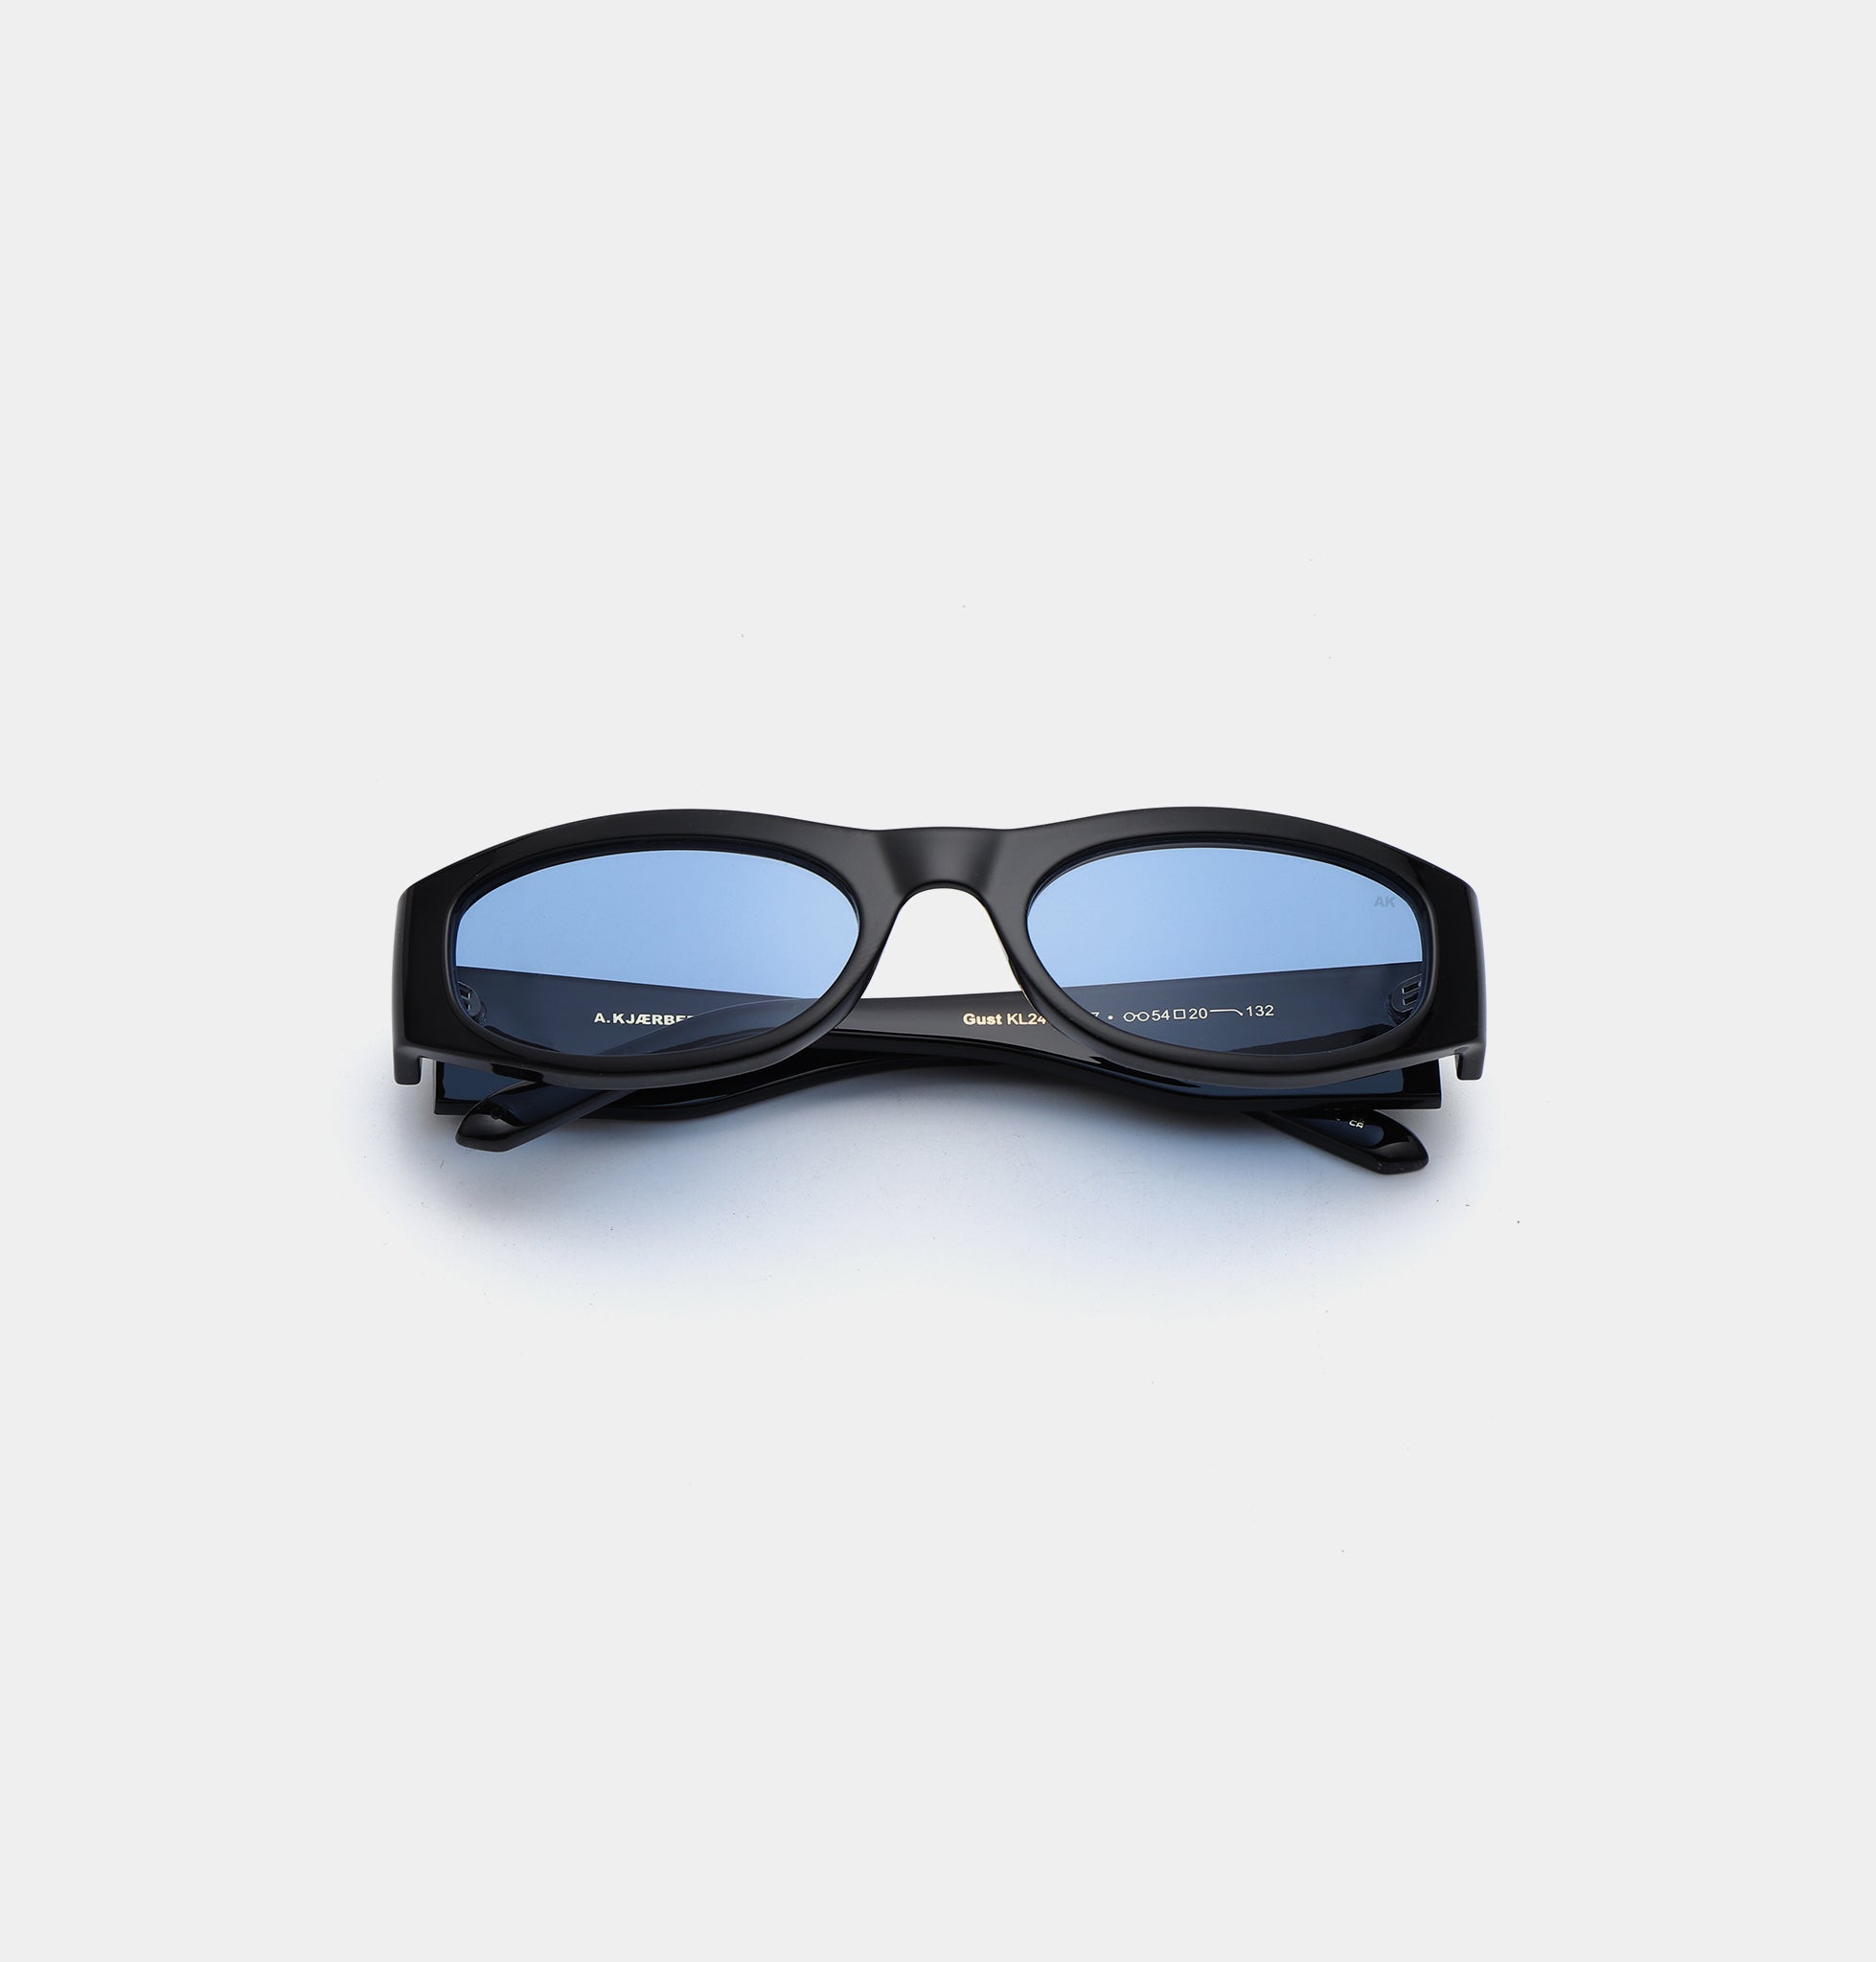 Gust Sunglasses - Black / Blue